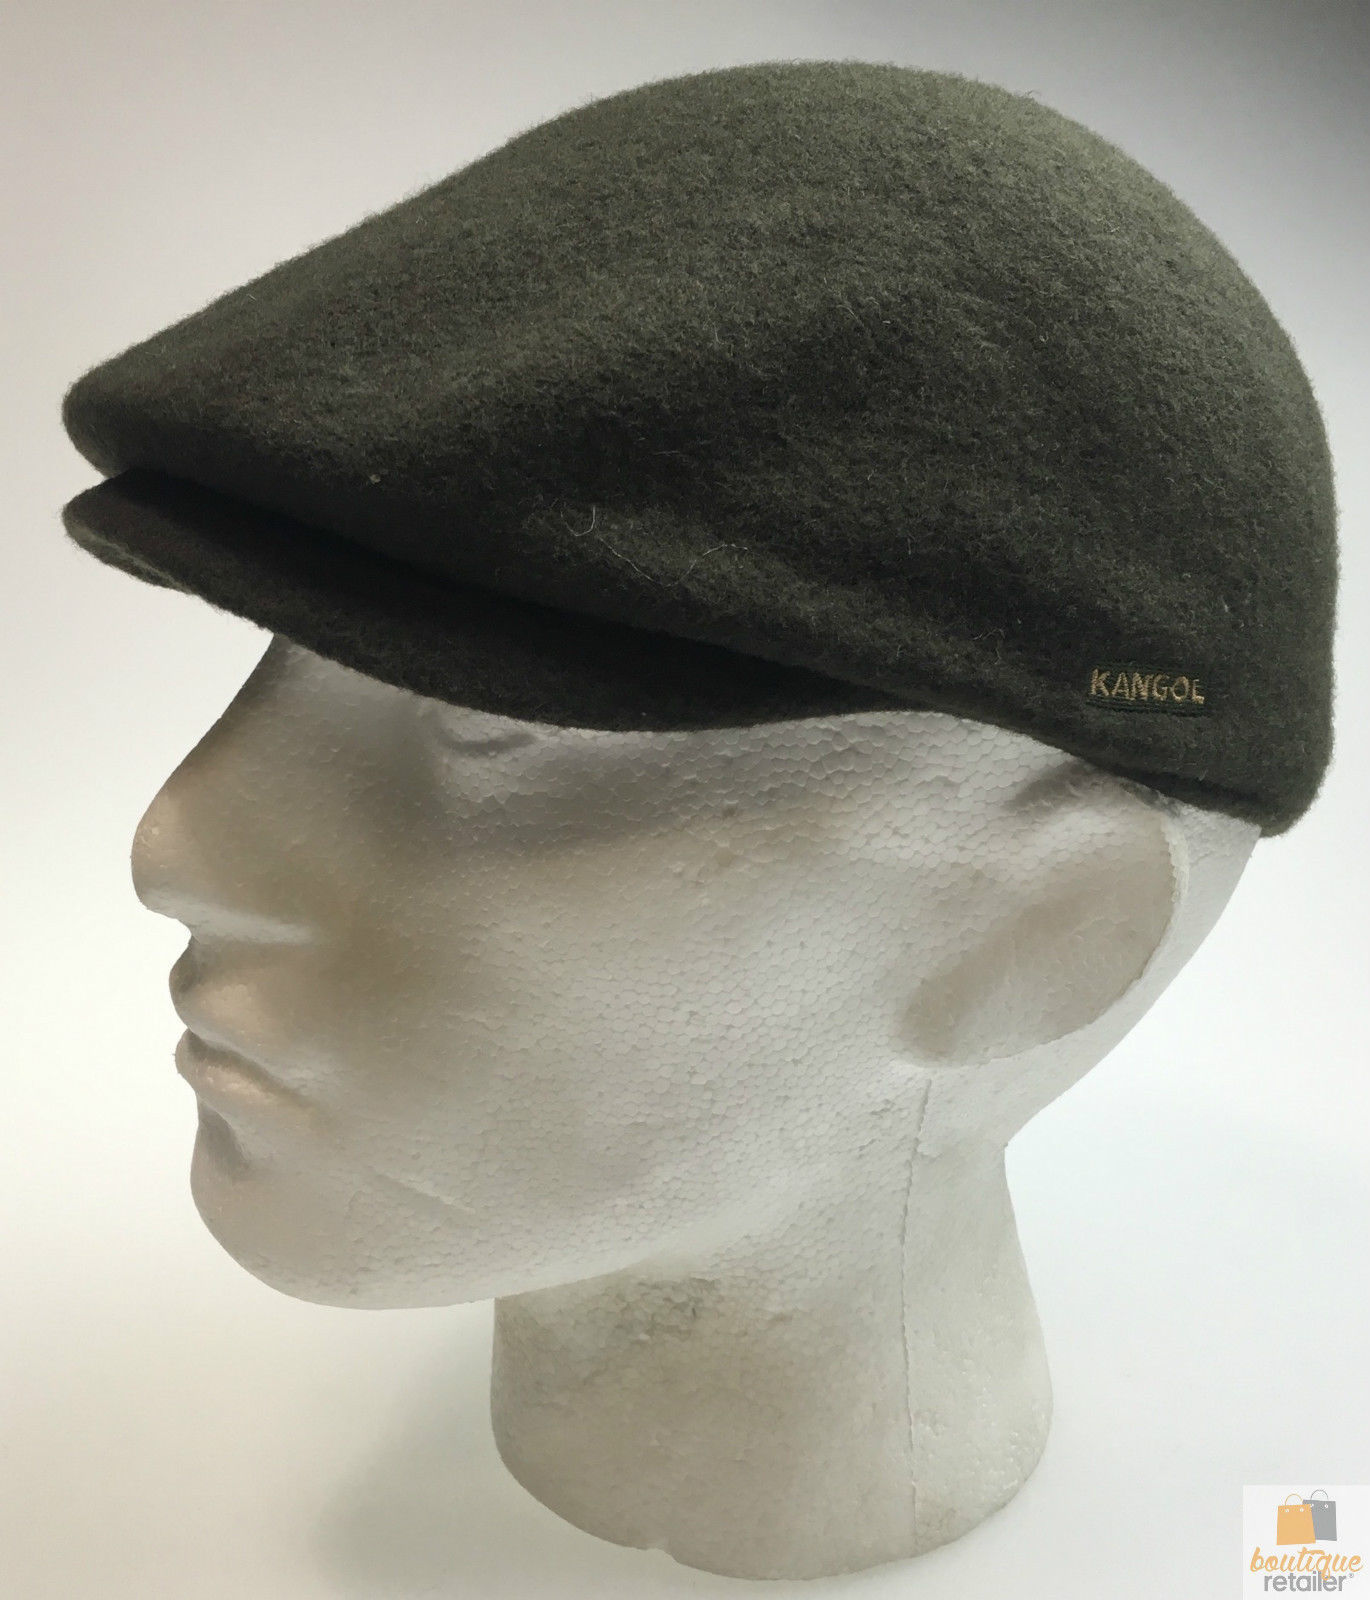 KANGOL Wool Clery Cap - Warm Winter Driving Hat Seamless 6988BC New ...